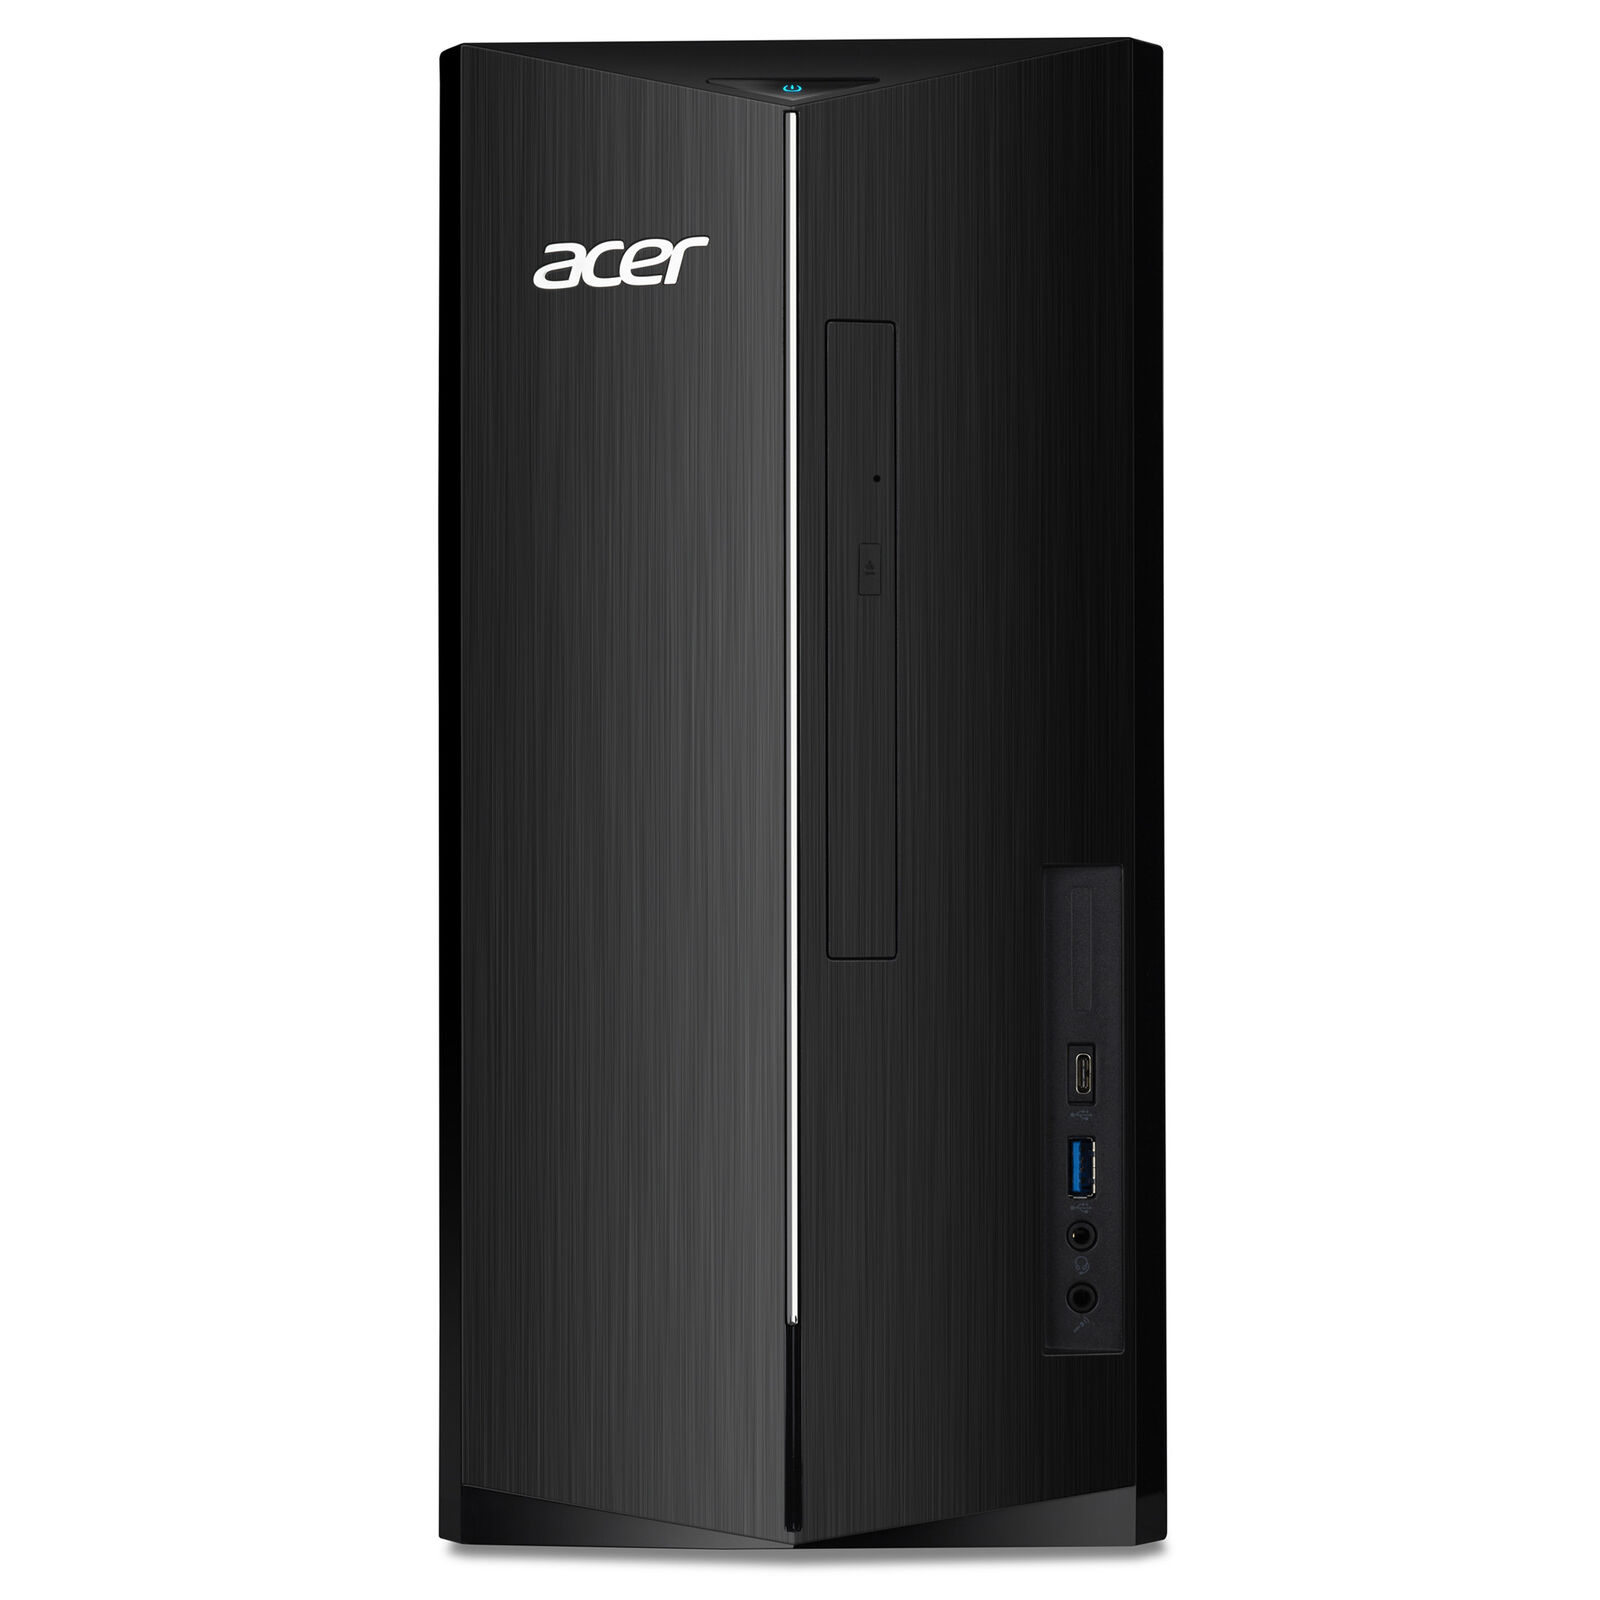 Factory Recertified Acer Aspire TC-1760-UA92 Desktop i5-12400 2.5-4.4GHz 12GB DDR4 512GB NVMe SSD WiFi6 DVDRW Windows 11 Home $336.69